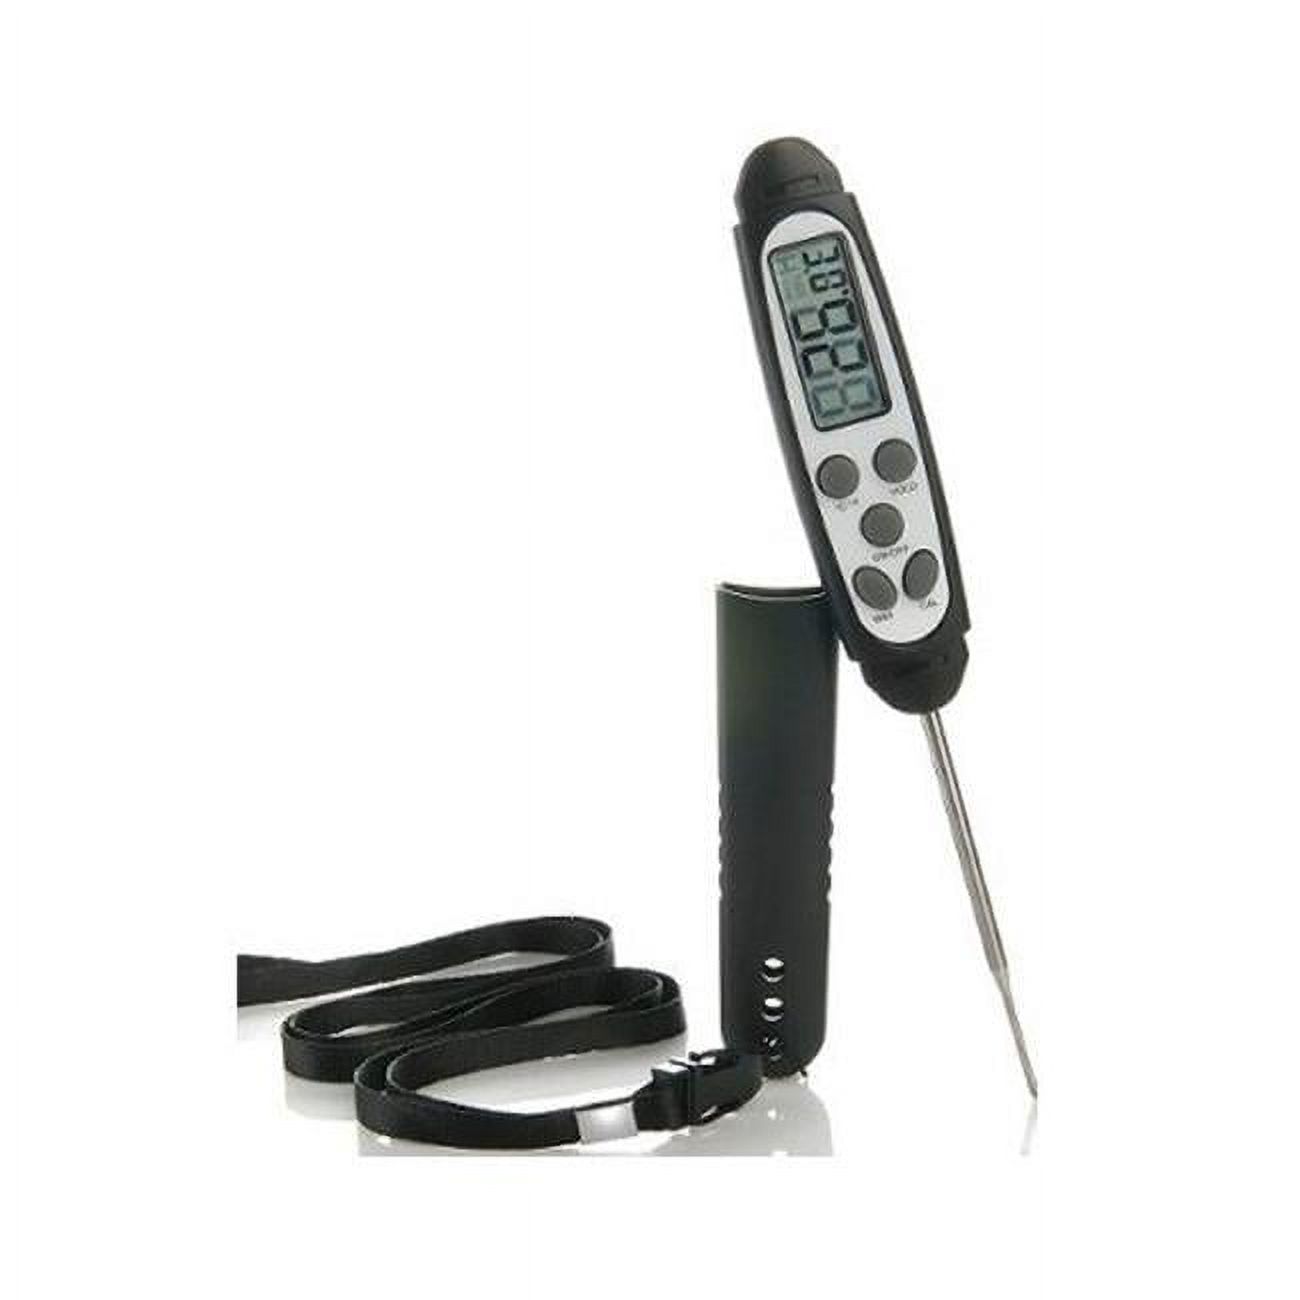 Maverick Digital Probe Thermometer - image 1 of 4